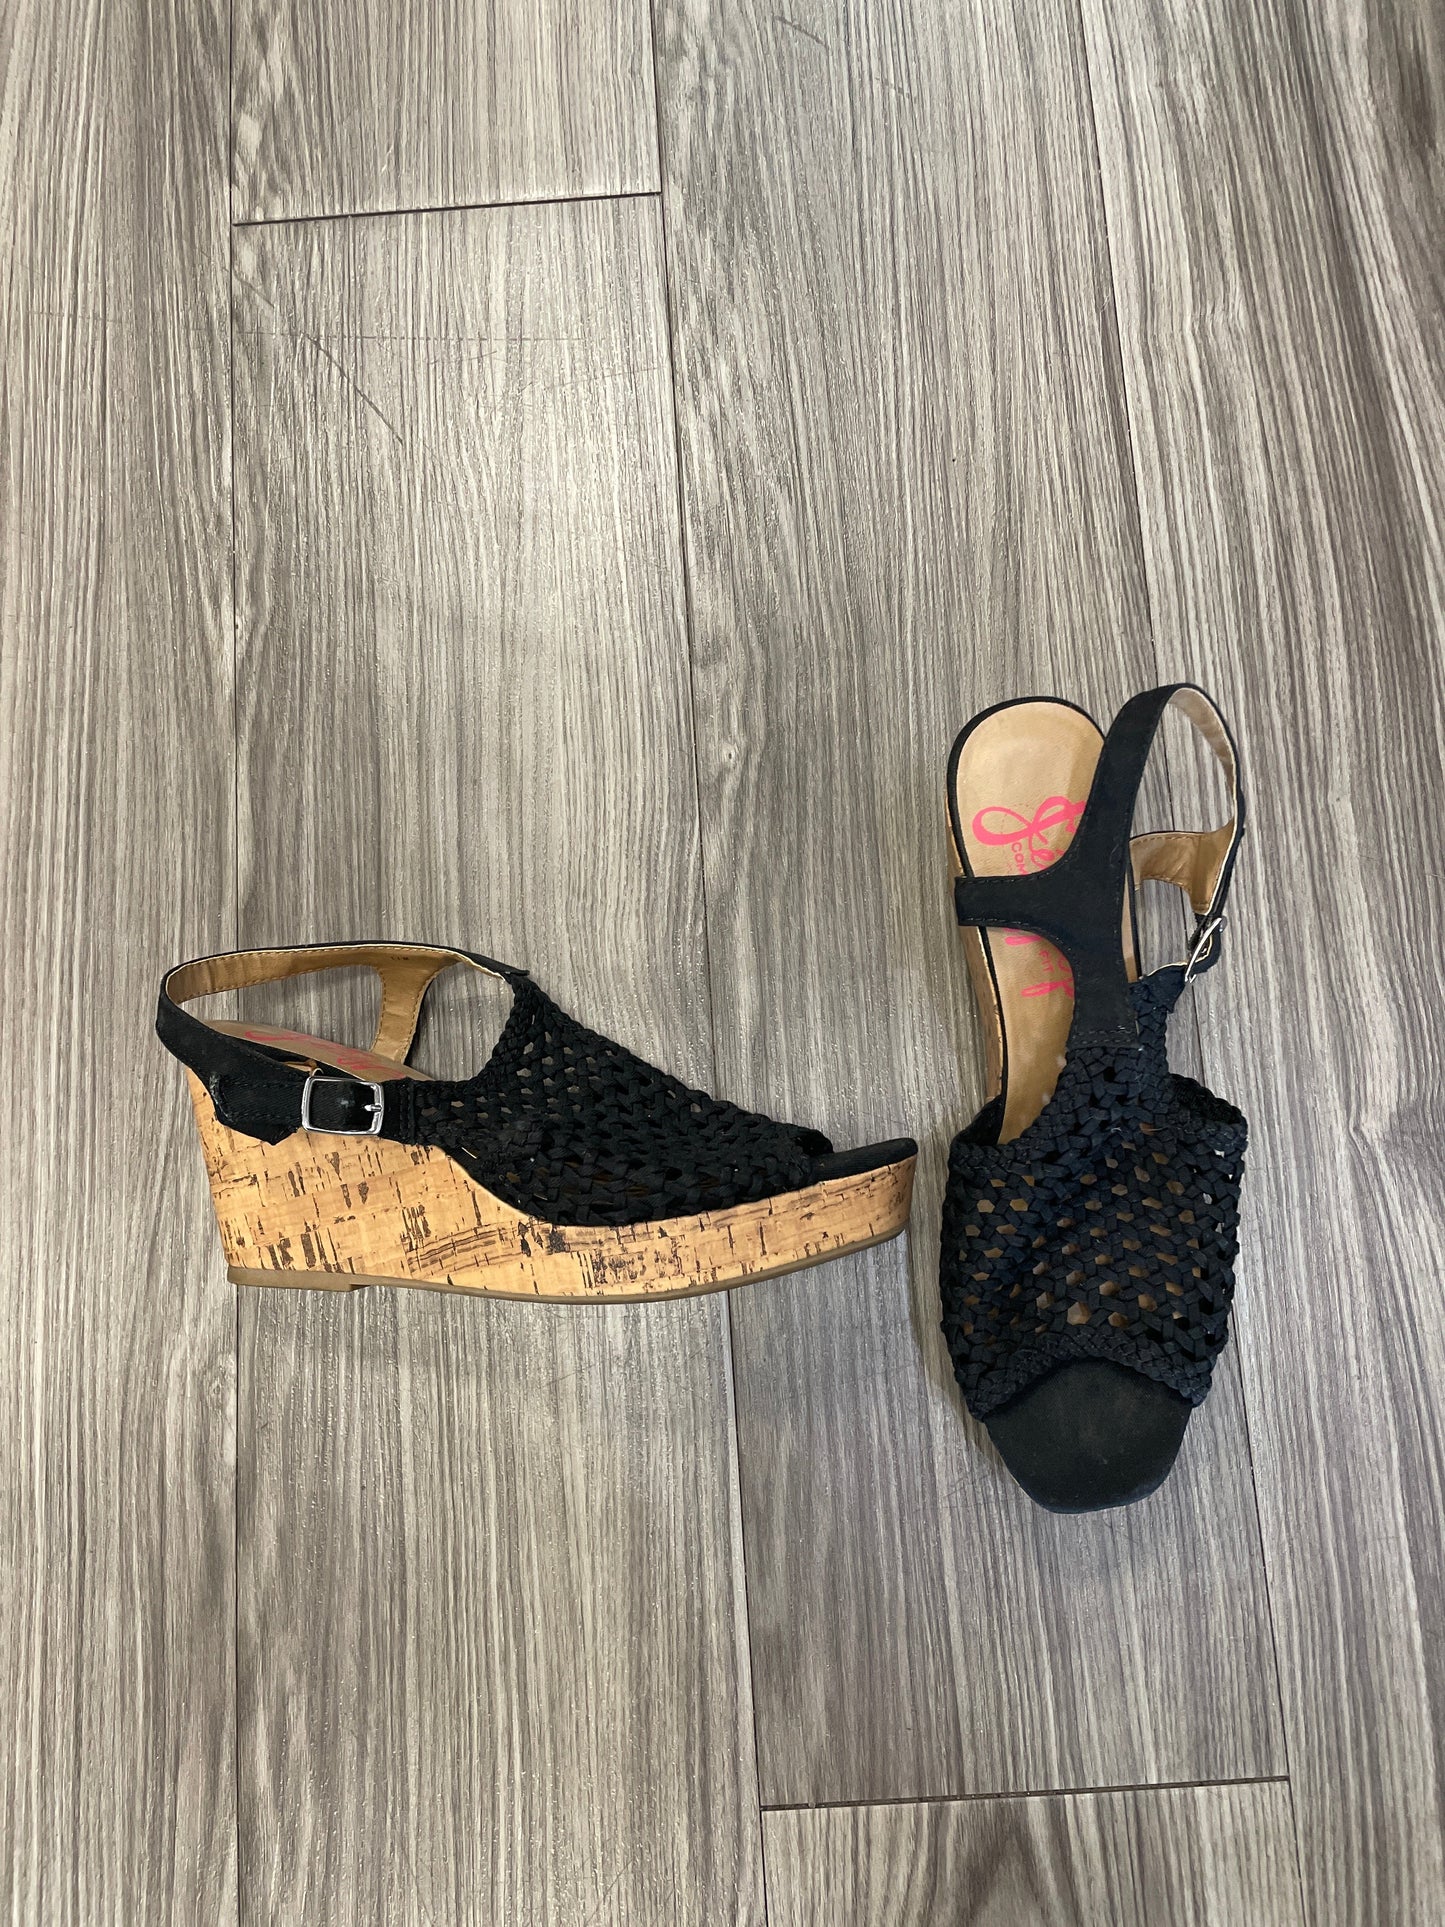 Black & Tan Sandals Heels Wedge Jelly Pop, Size 11